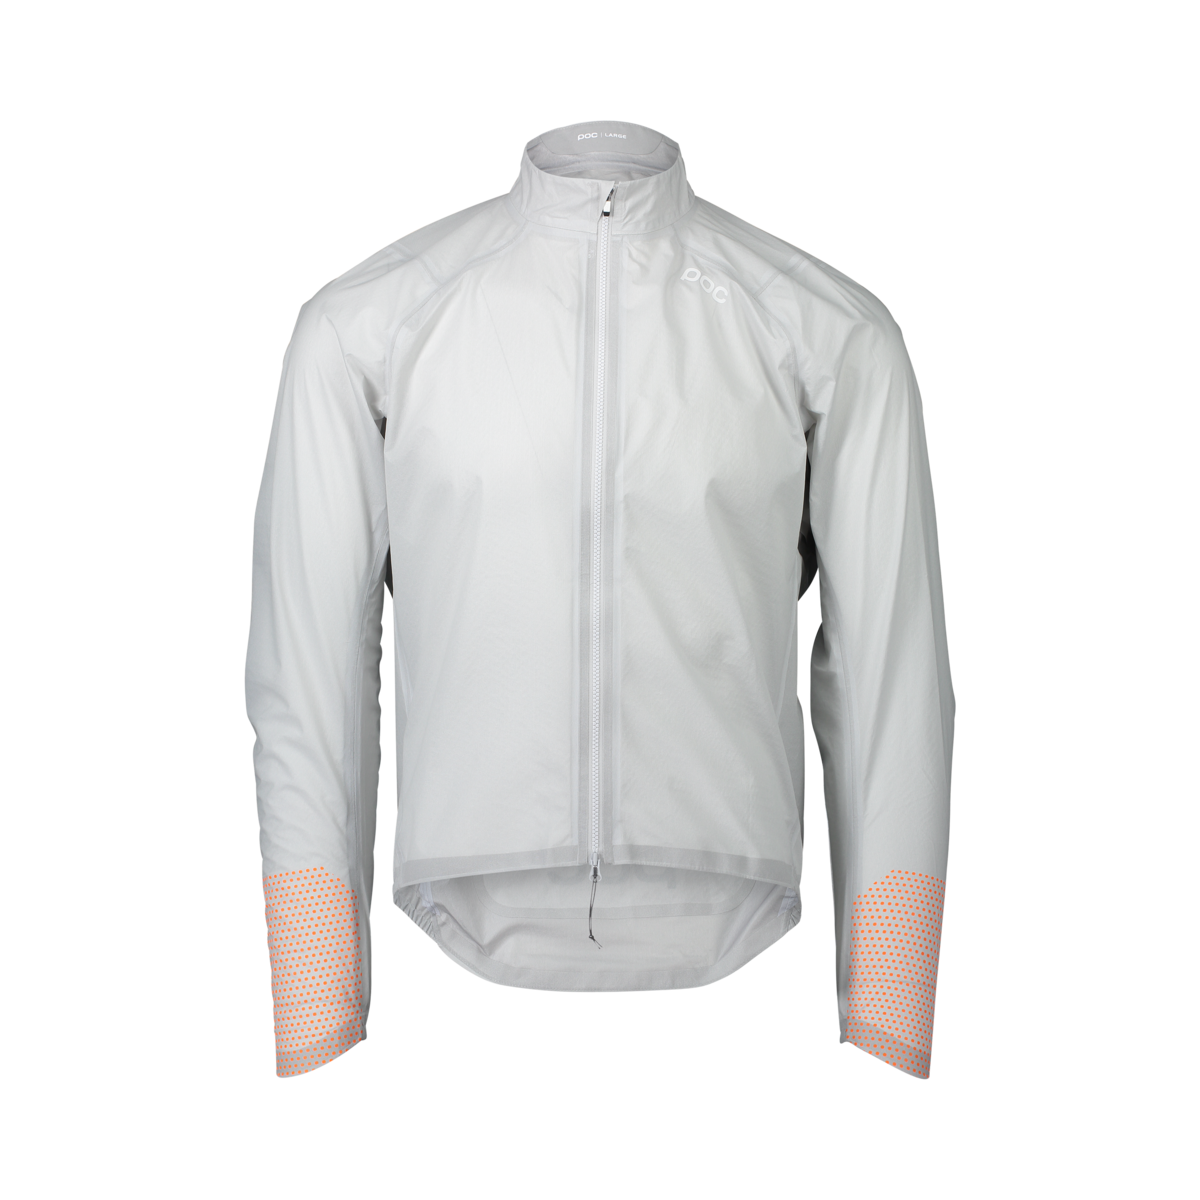 Poc Haven rain jacket - Chaqueta impermeable